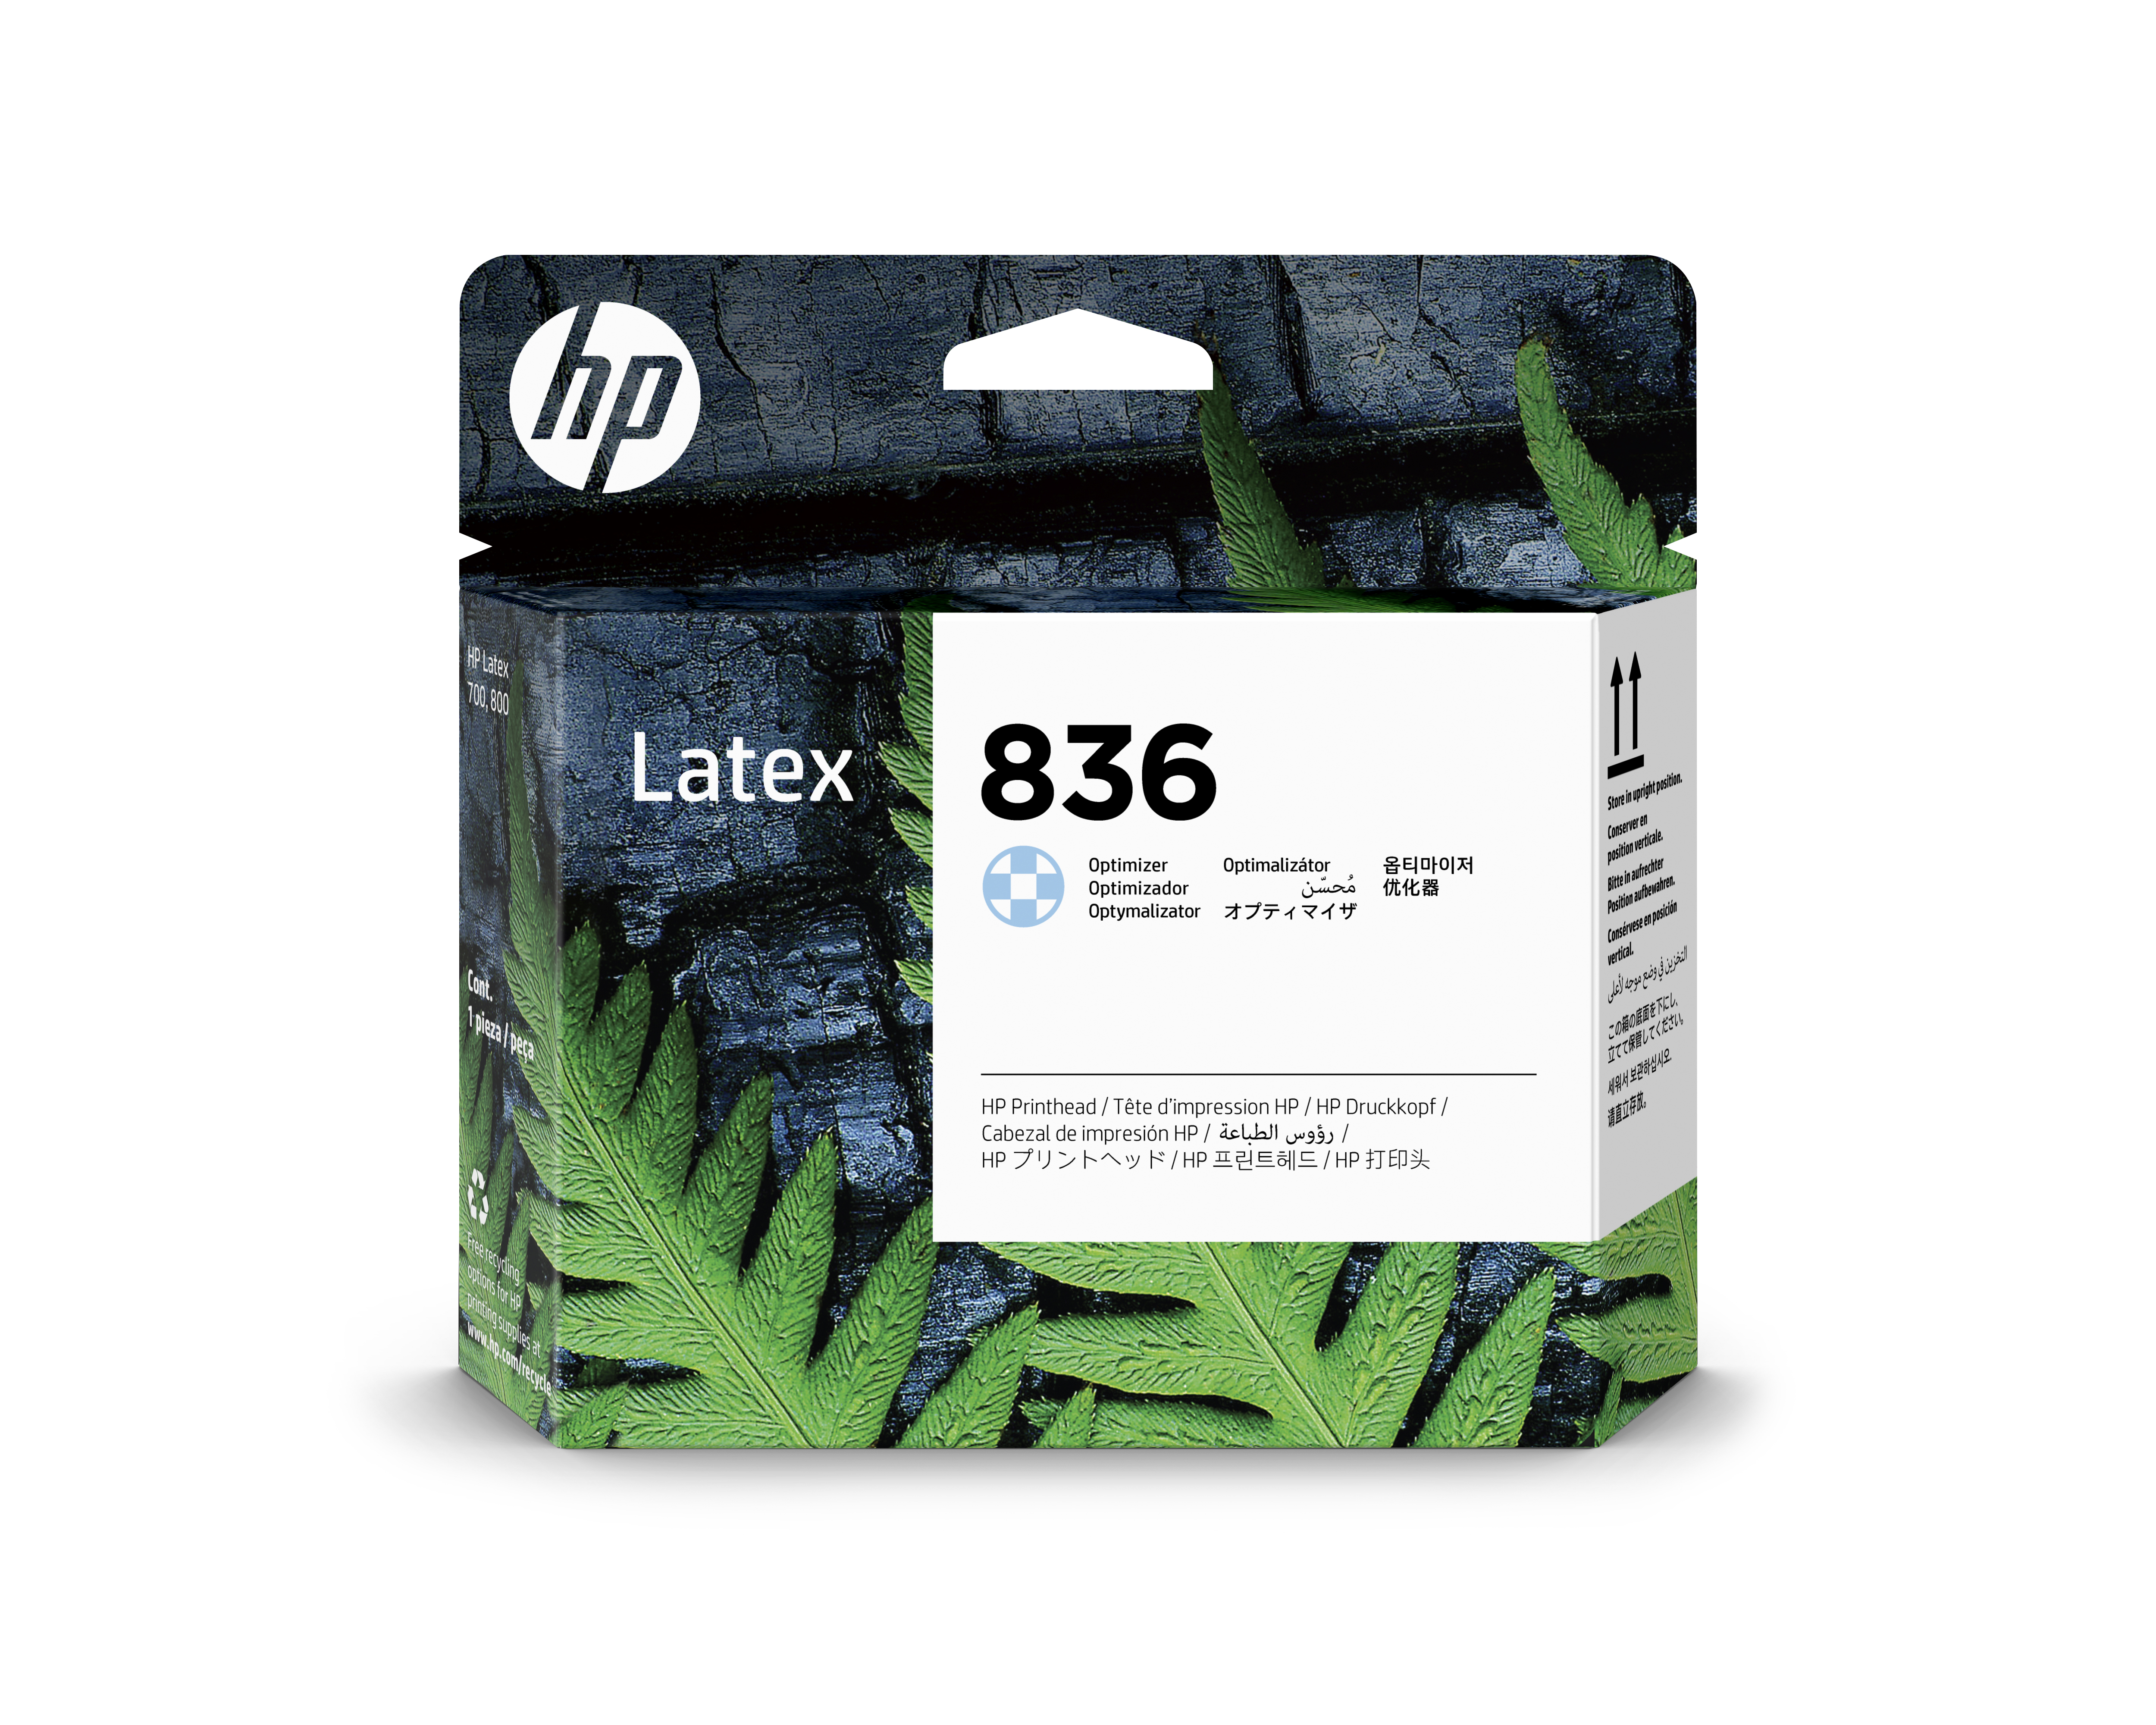 HP 836 Optimizer Latex Printhead